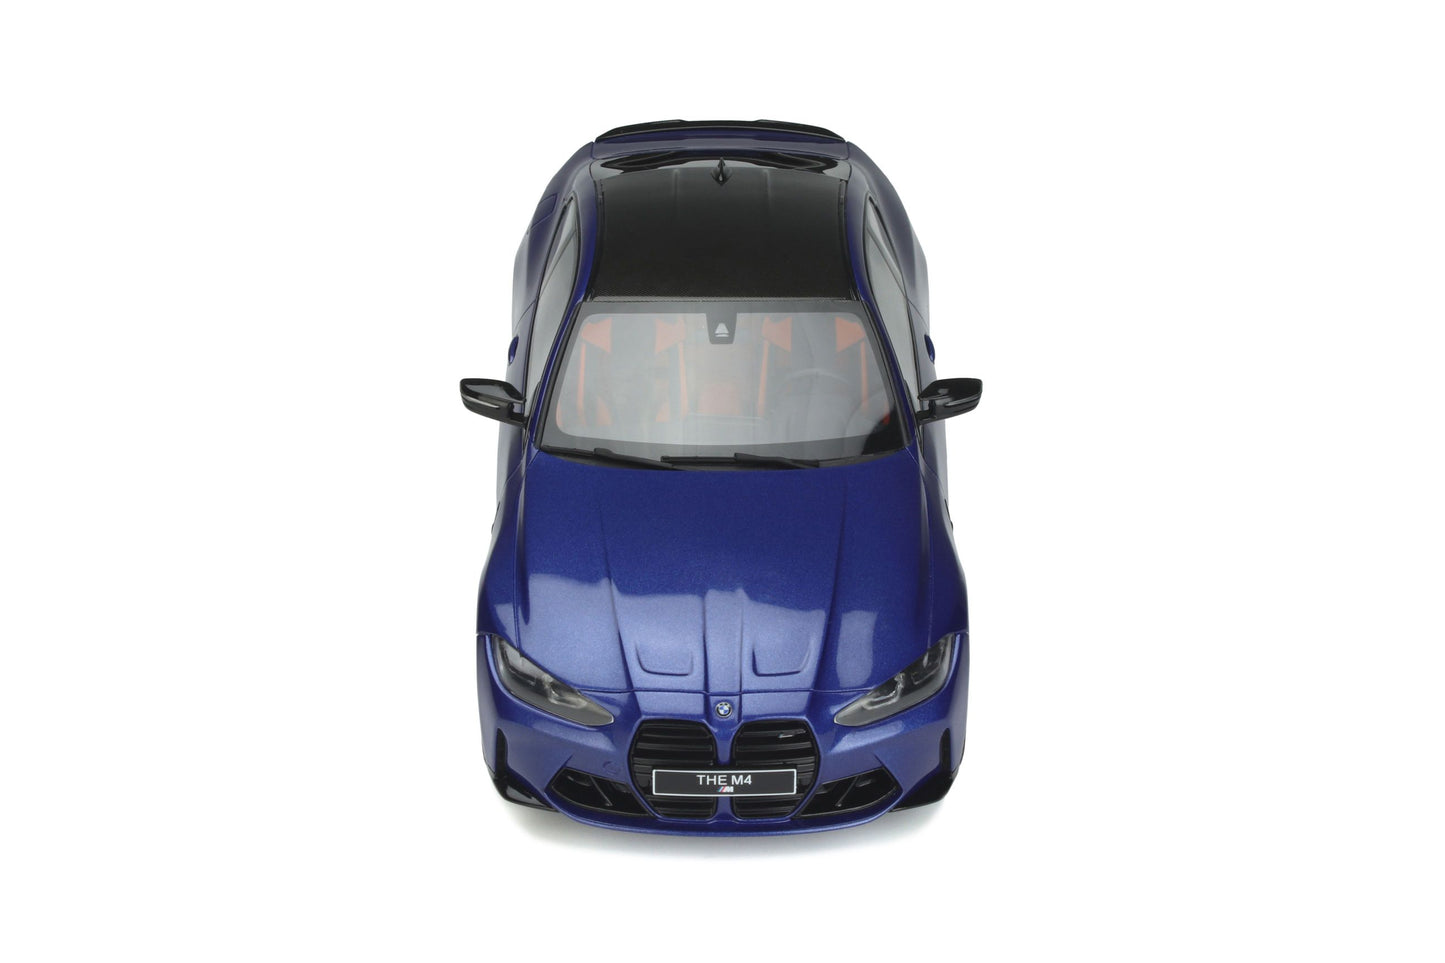 GT Spirit - BMW M4 (G82) Competition (Portimao Blue Metallic) 1:18 Scale Model Car